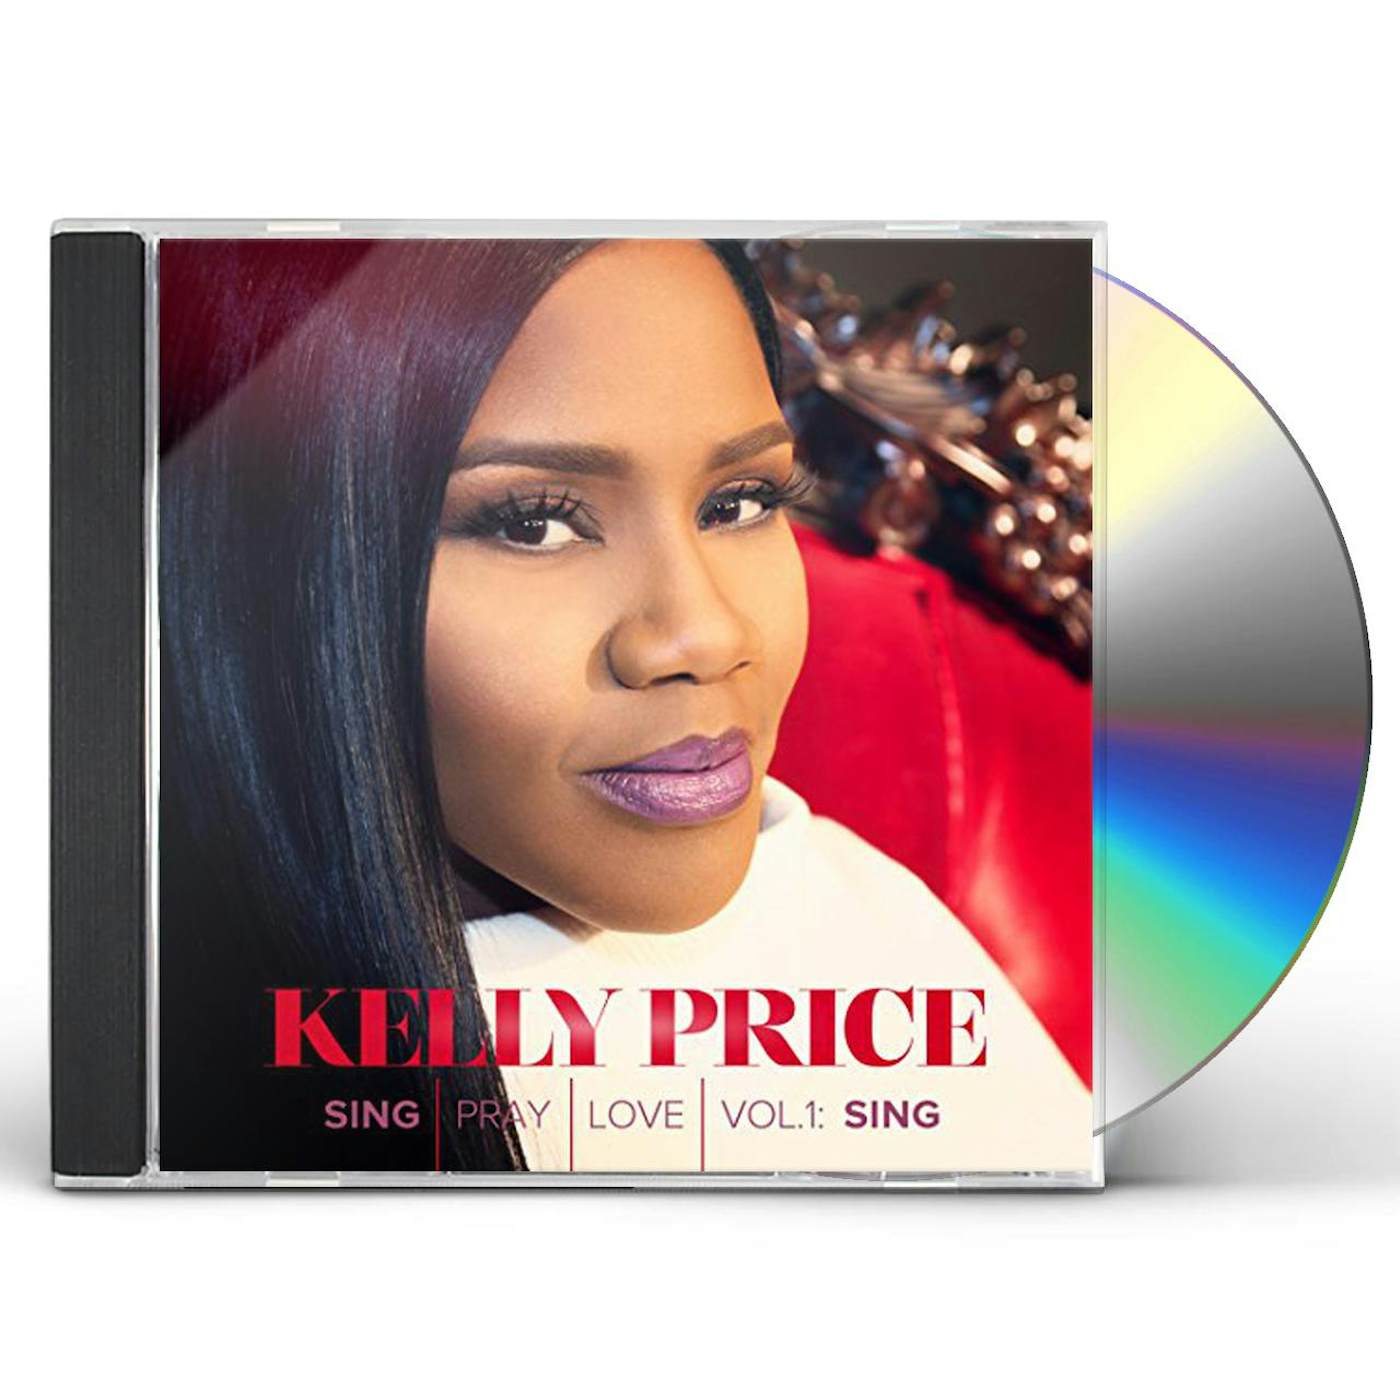 Kelly Price SING PRAY LOVE 1 CD